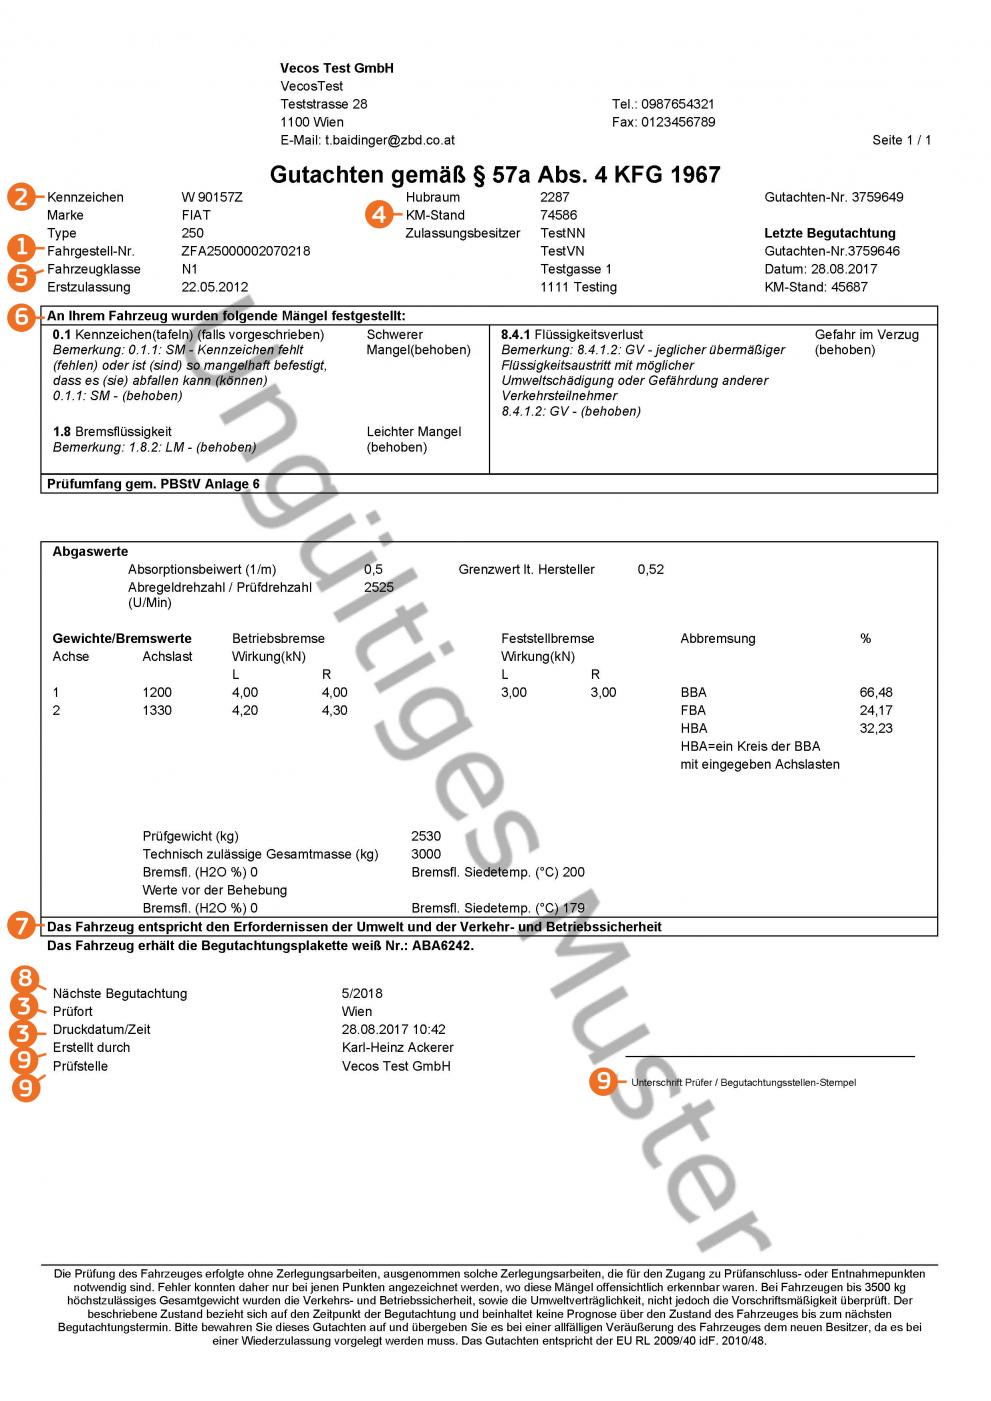 Austria RWC VECOS Document with codes